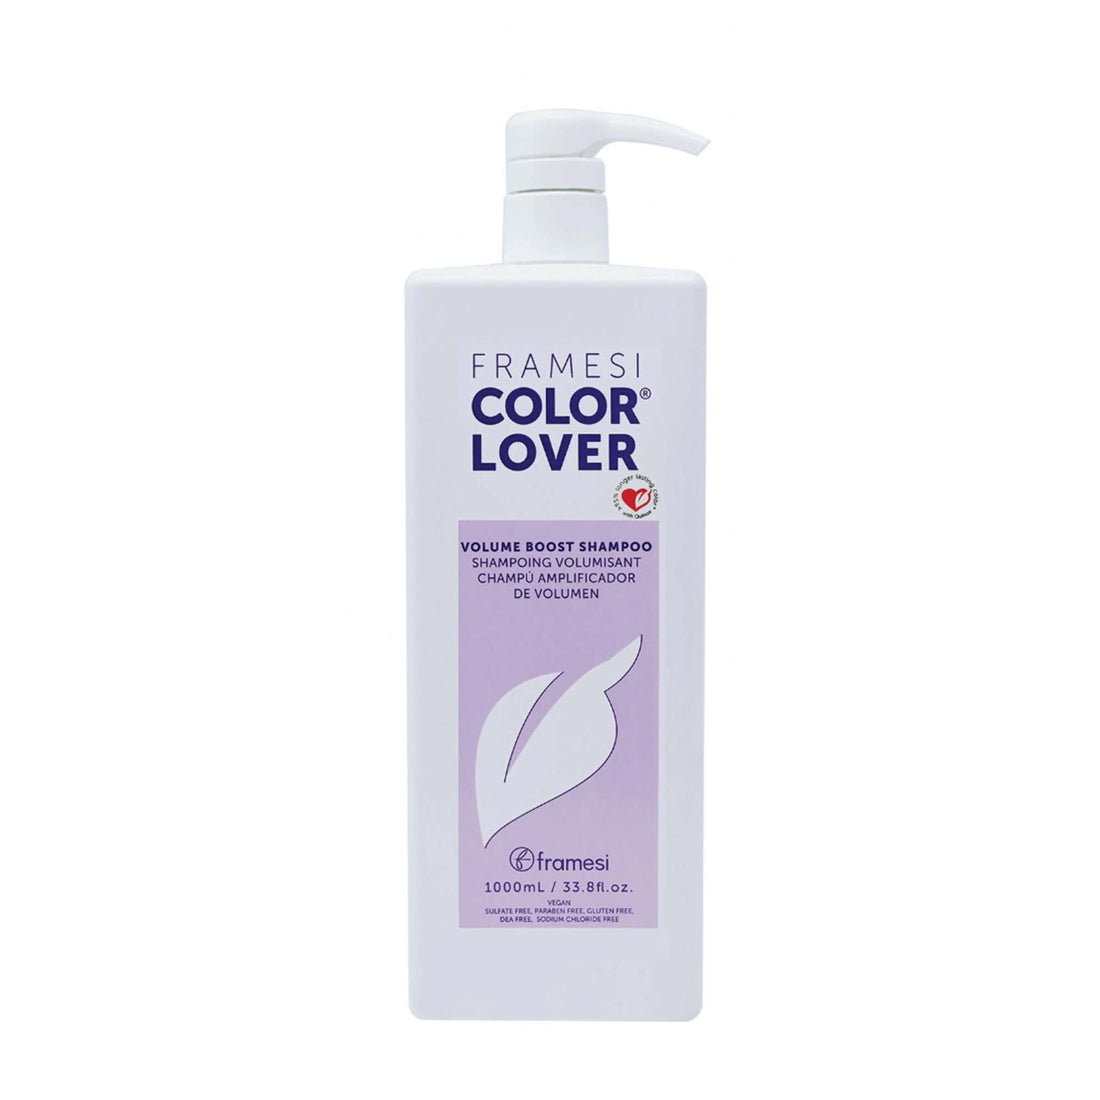 Framesi Color Lover Volume Boost Shampoo